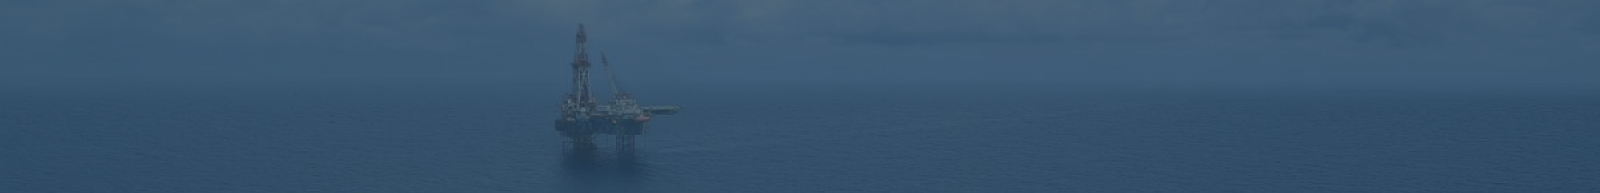 offshore panorama